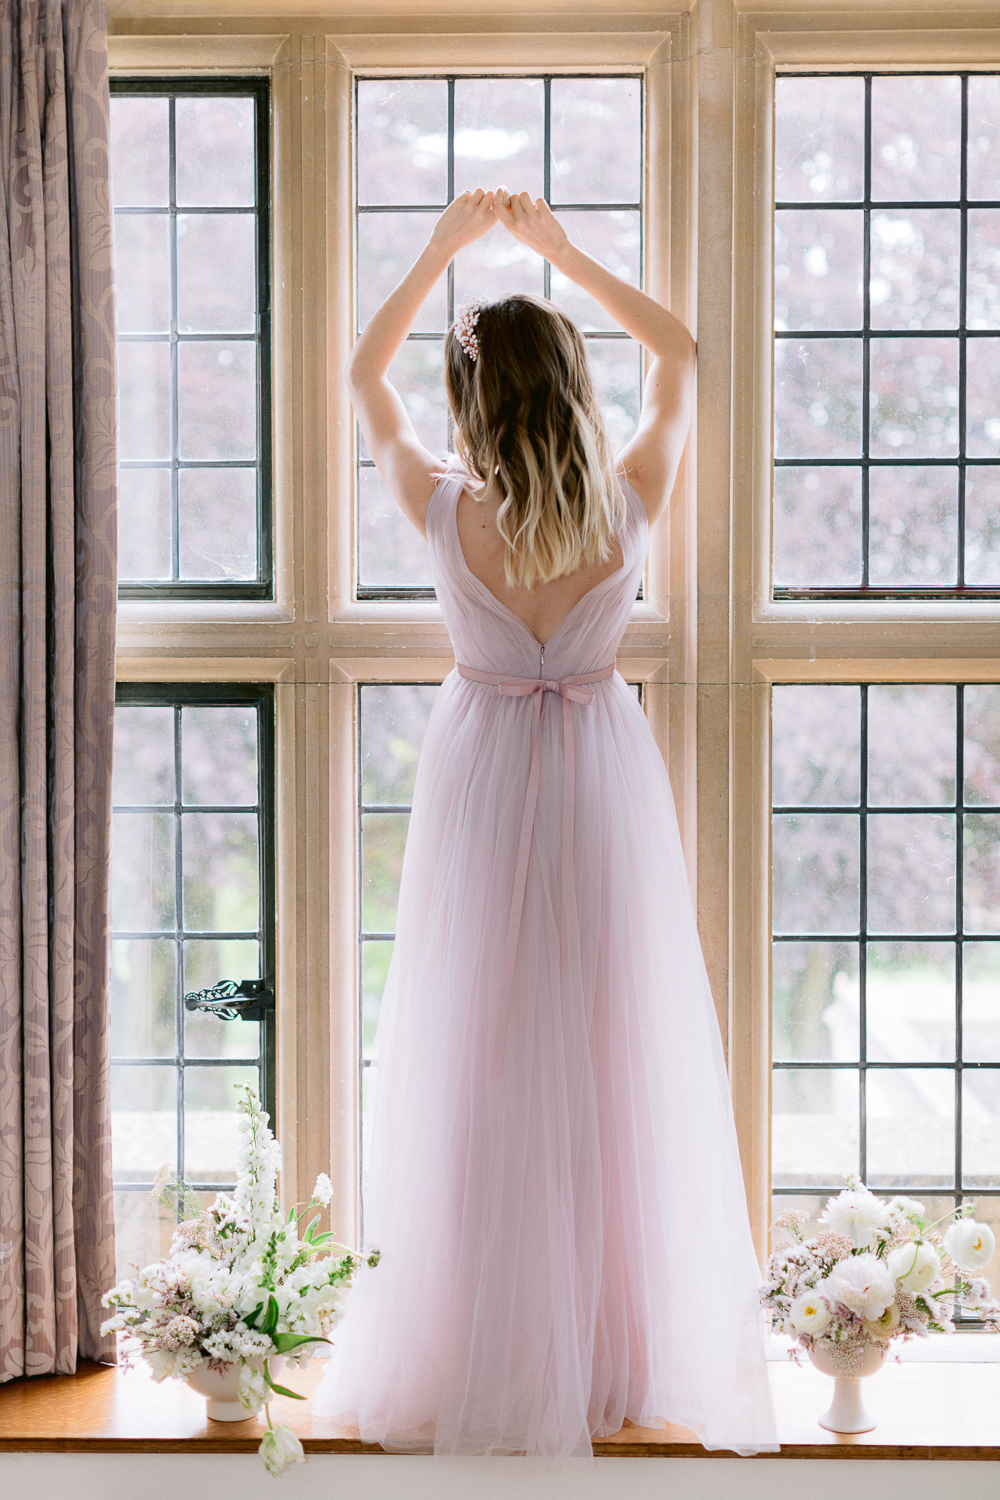 Lilac tulle bridesmaid dress in window of fairytale wedding venue 